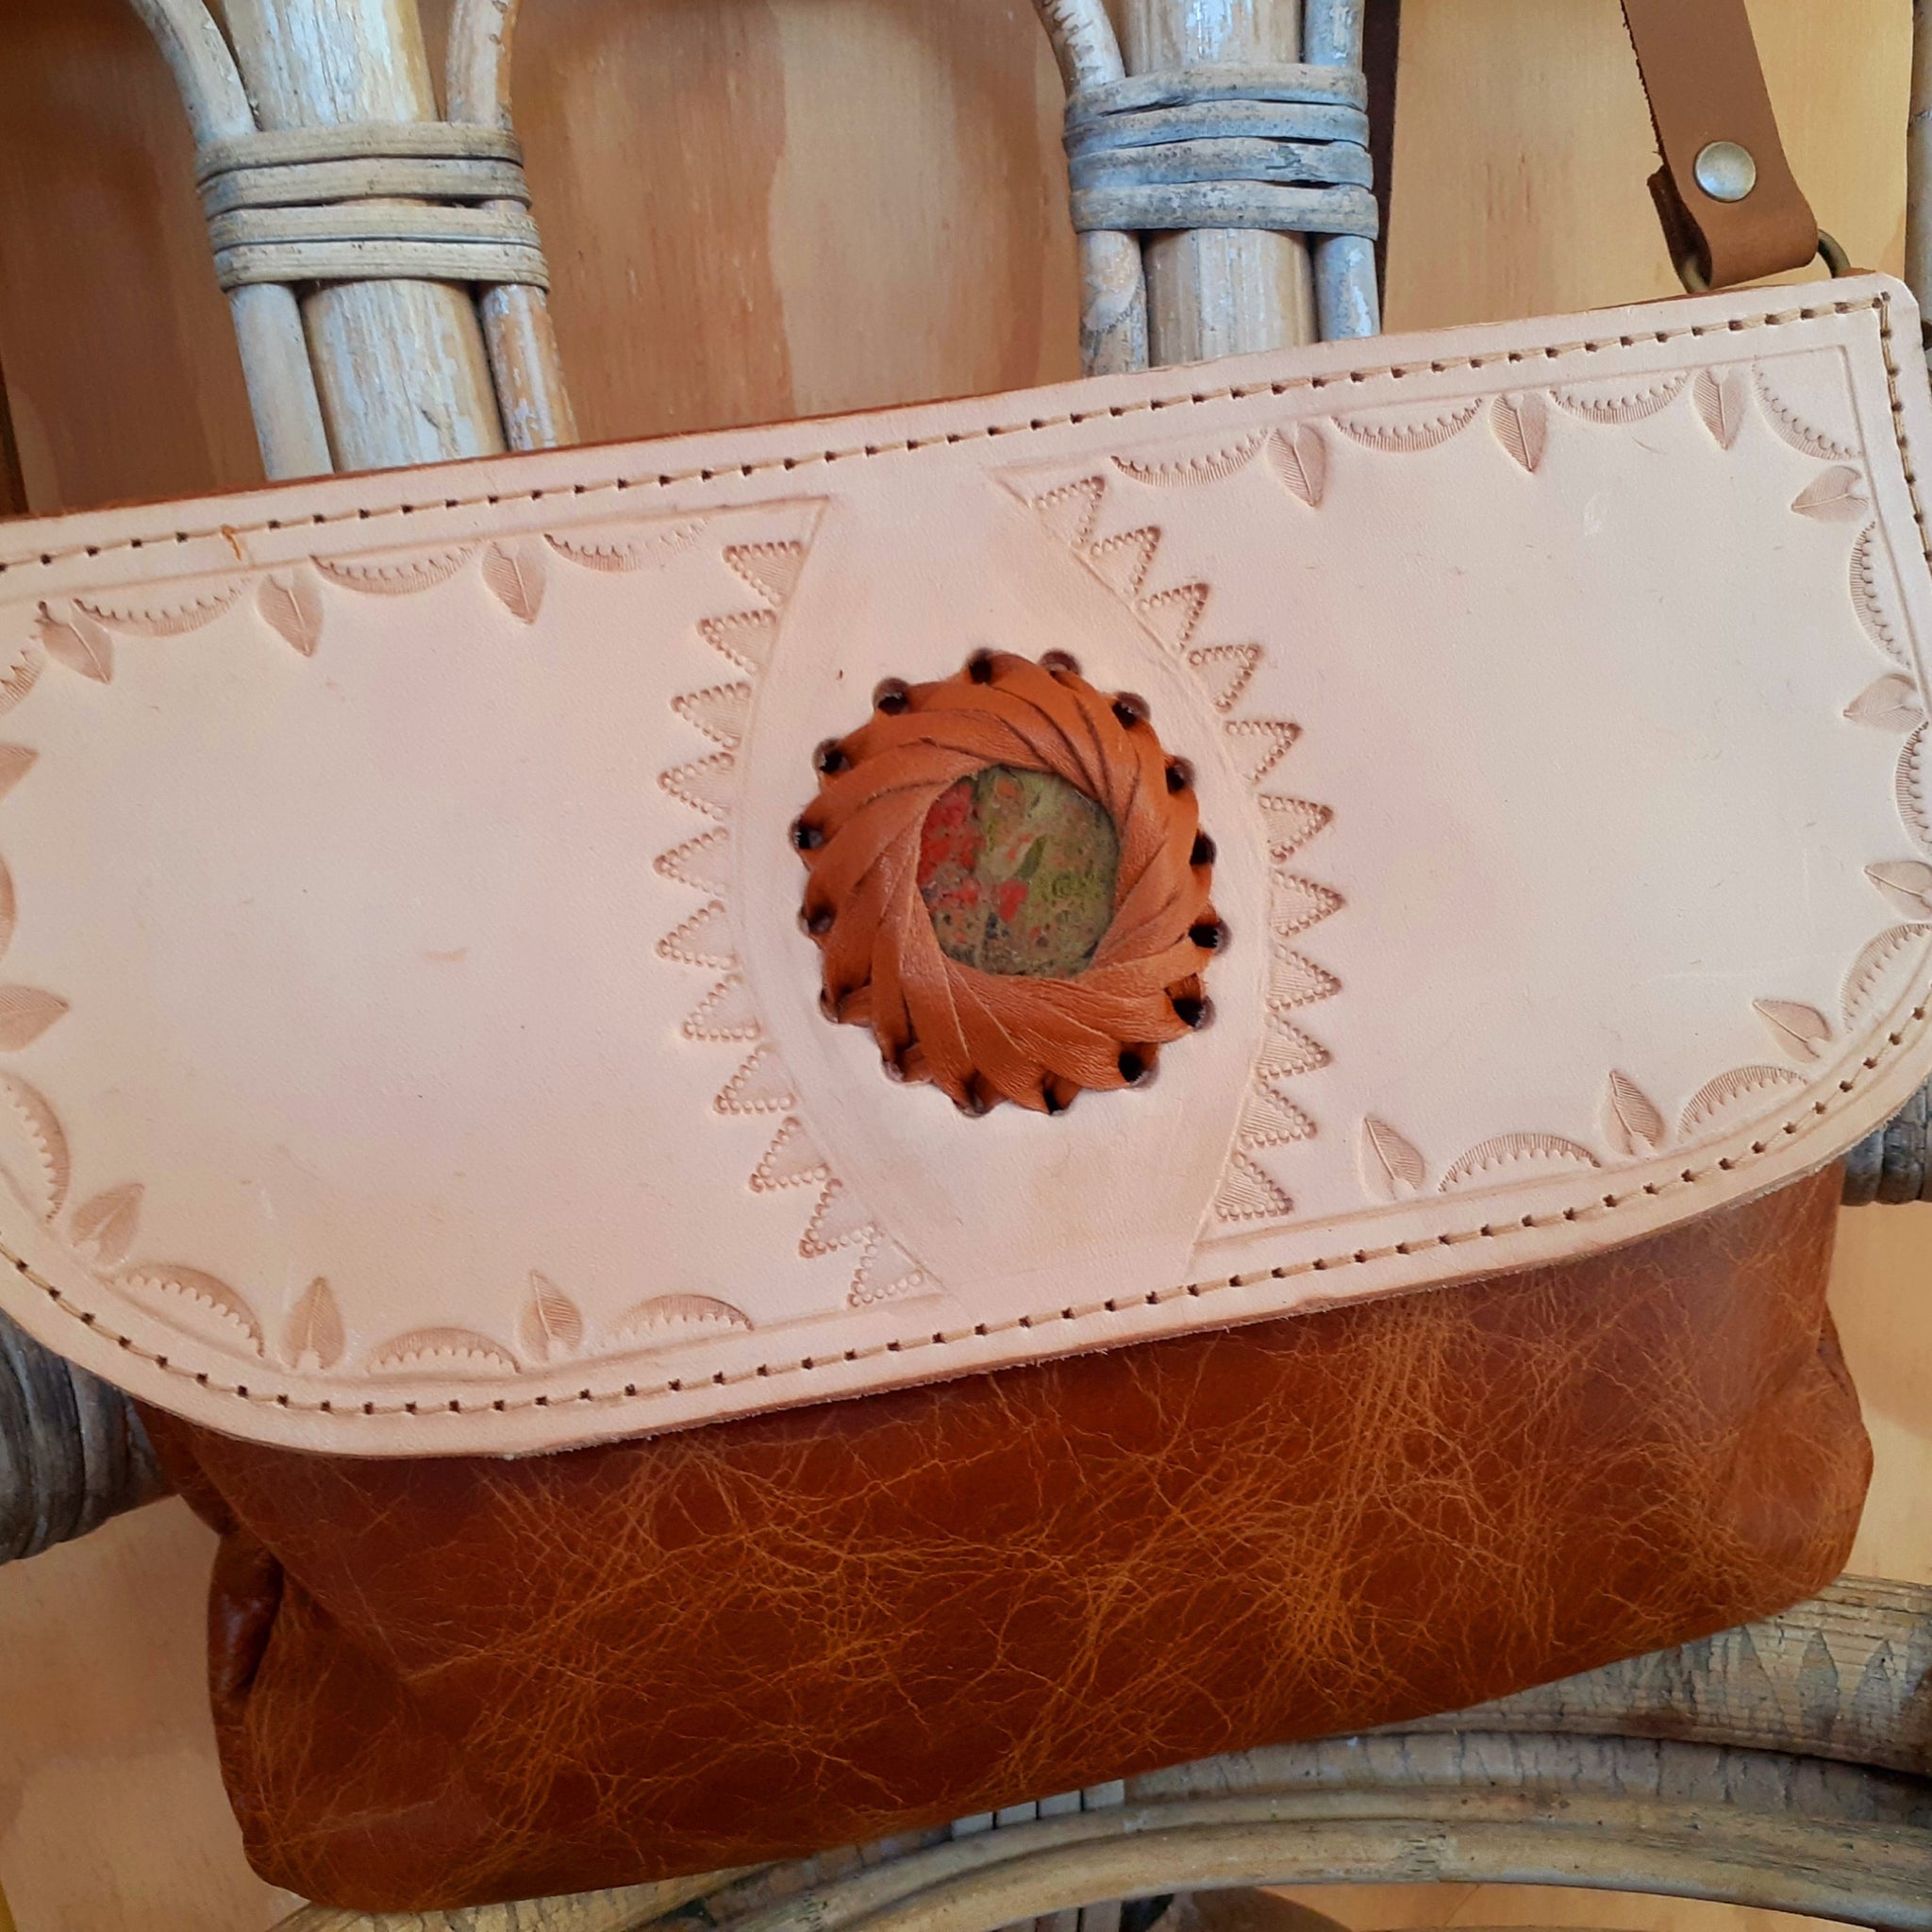 70s tooled leather bag - Gem